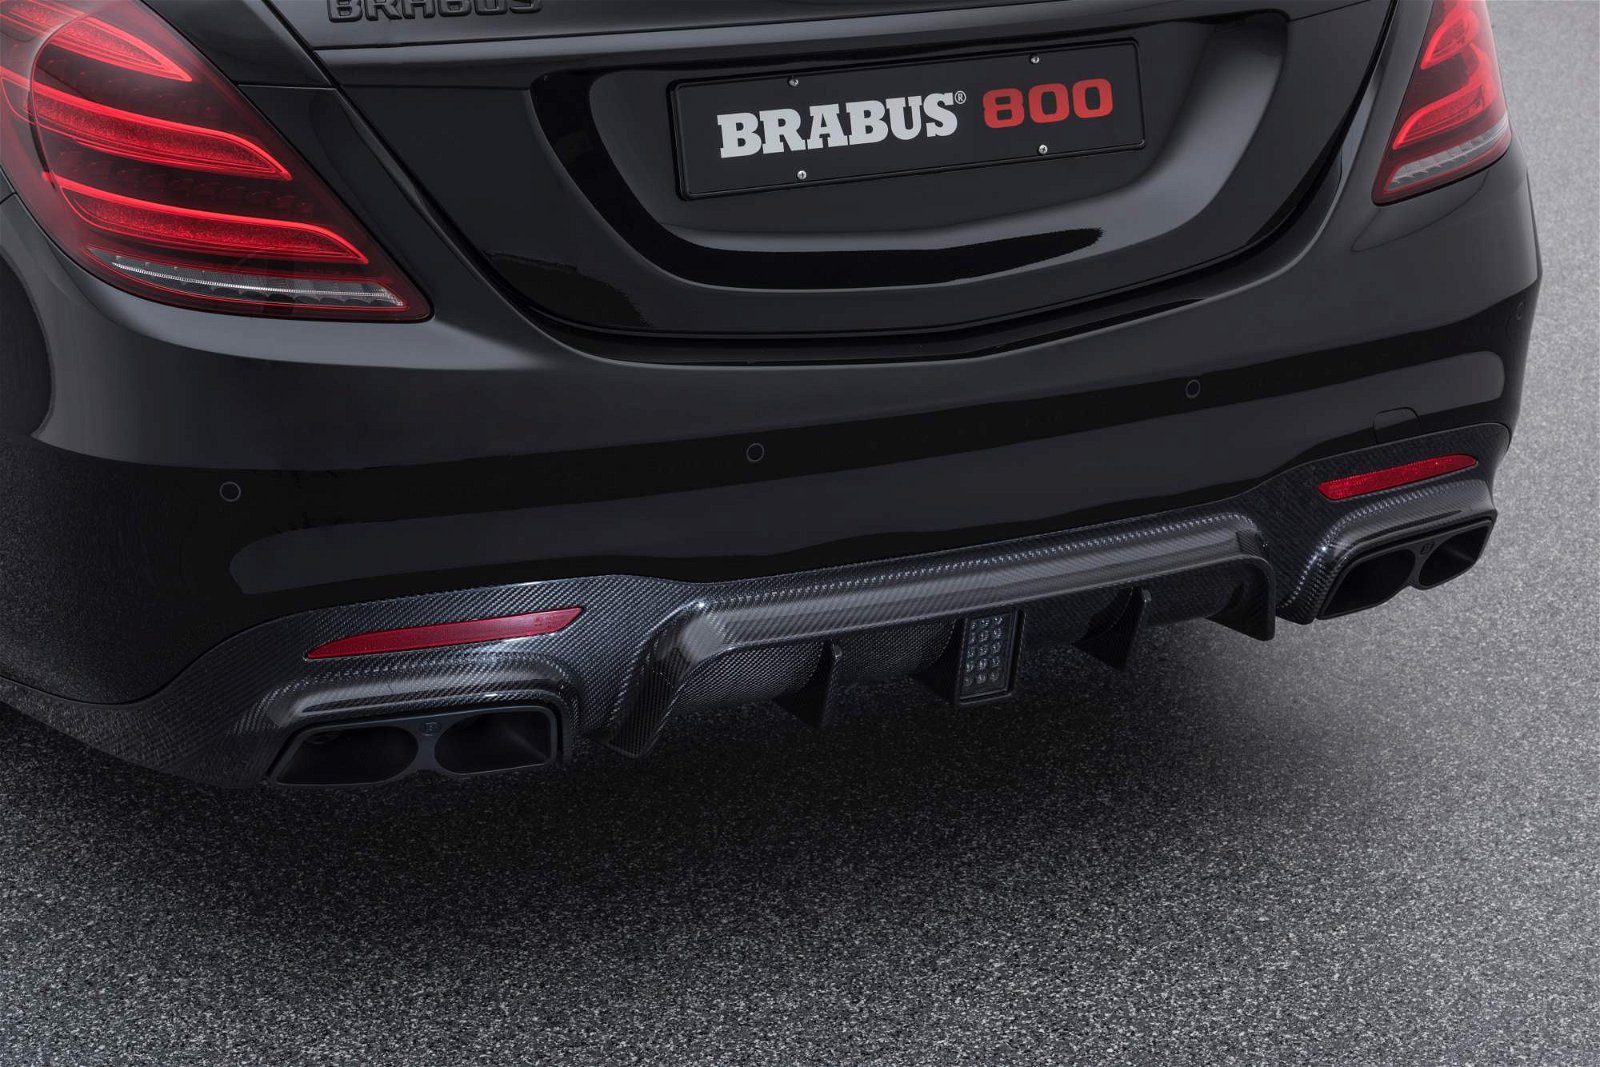 Brabus-800-based-on-Mercedes-AMG-S63-4MATIC+-sedan-9